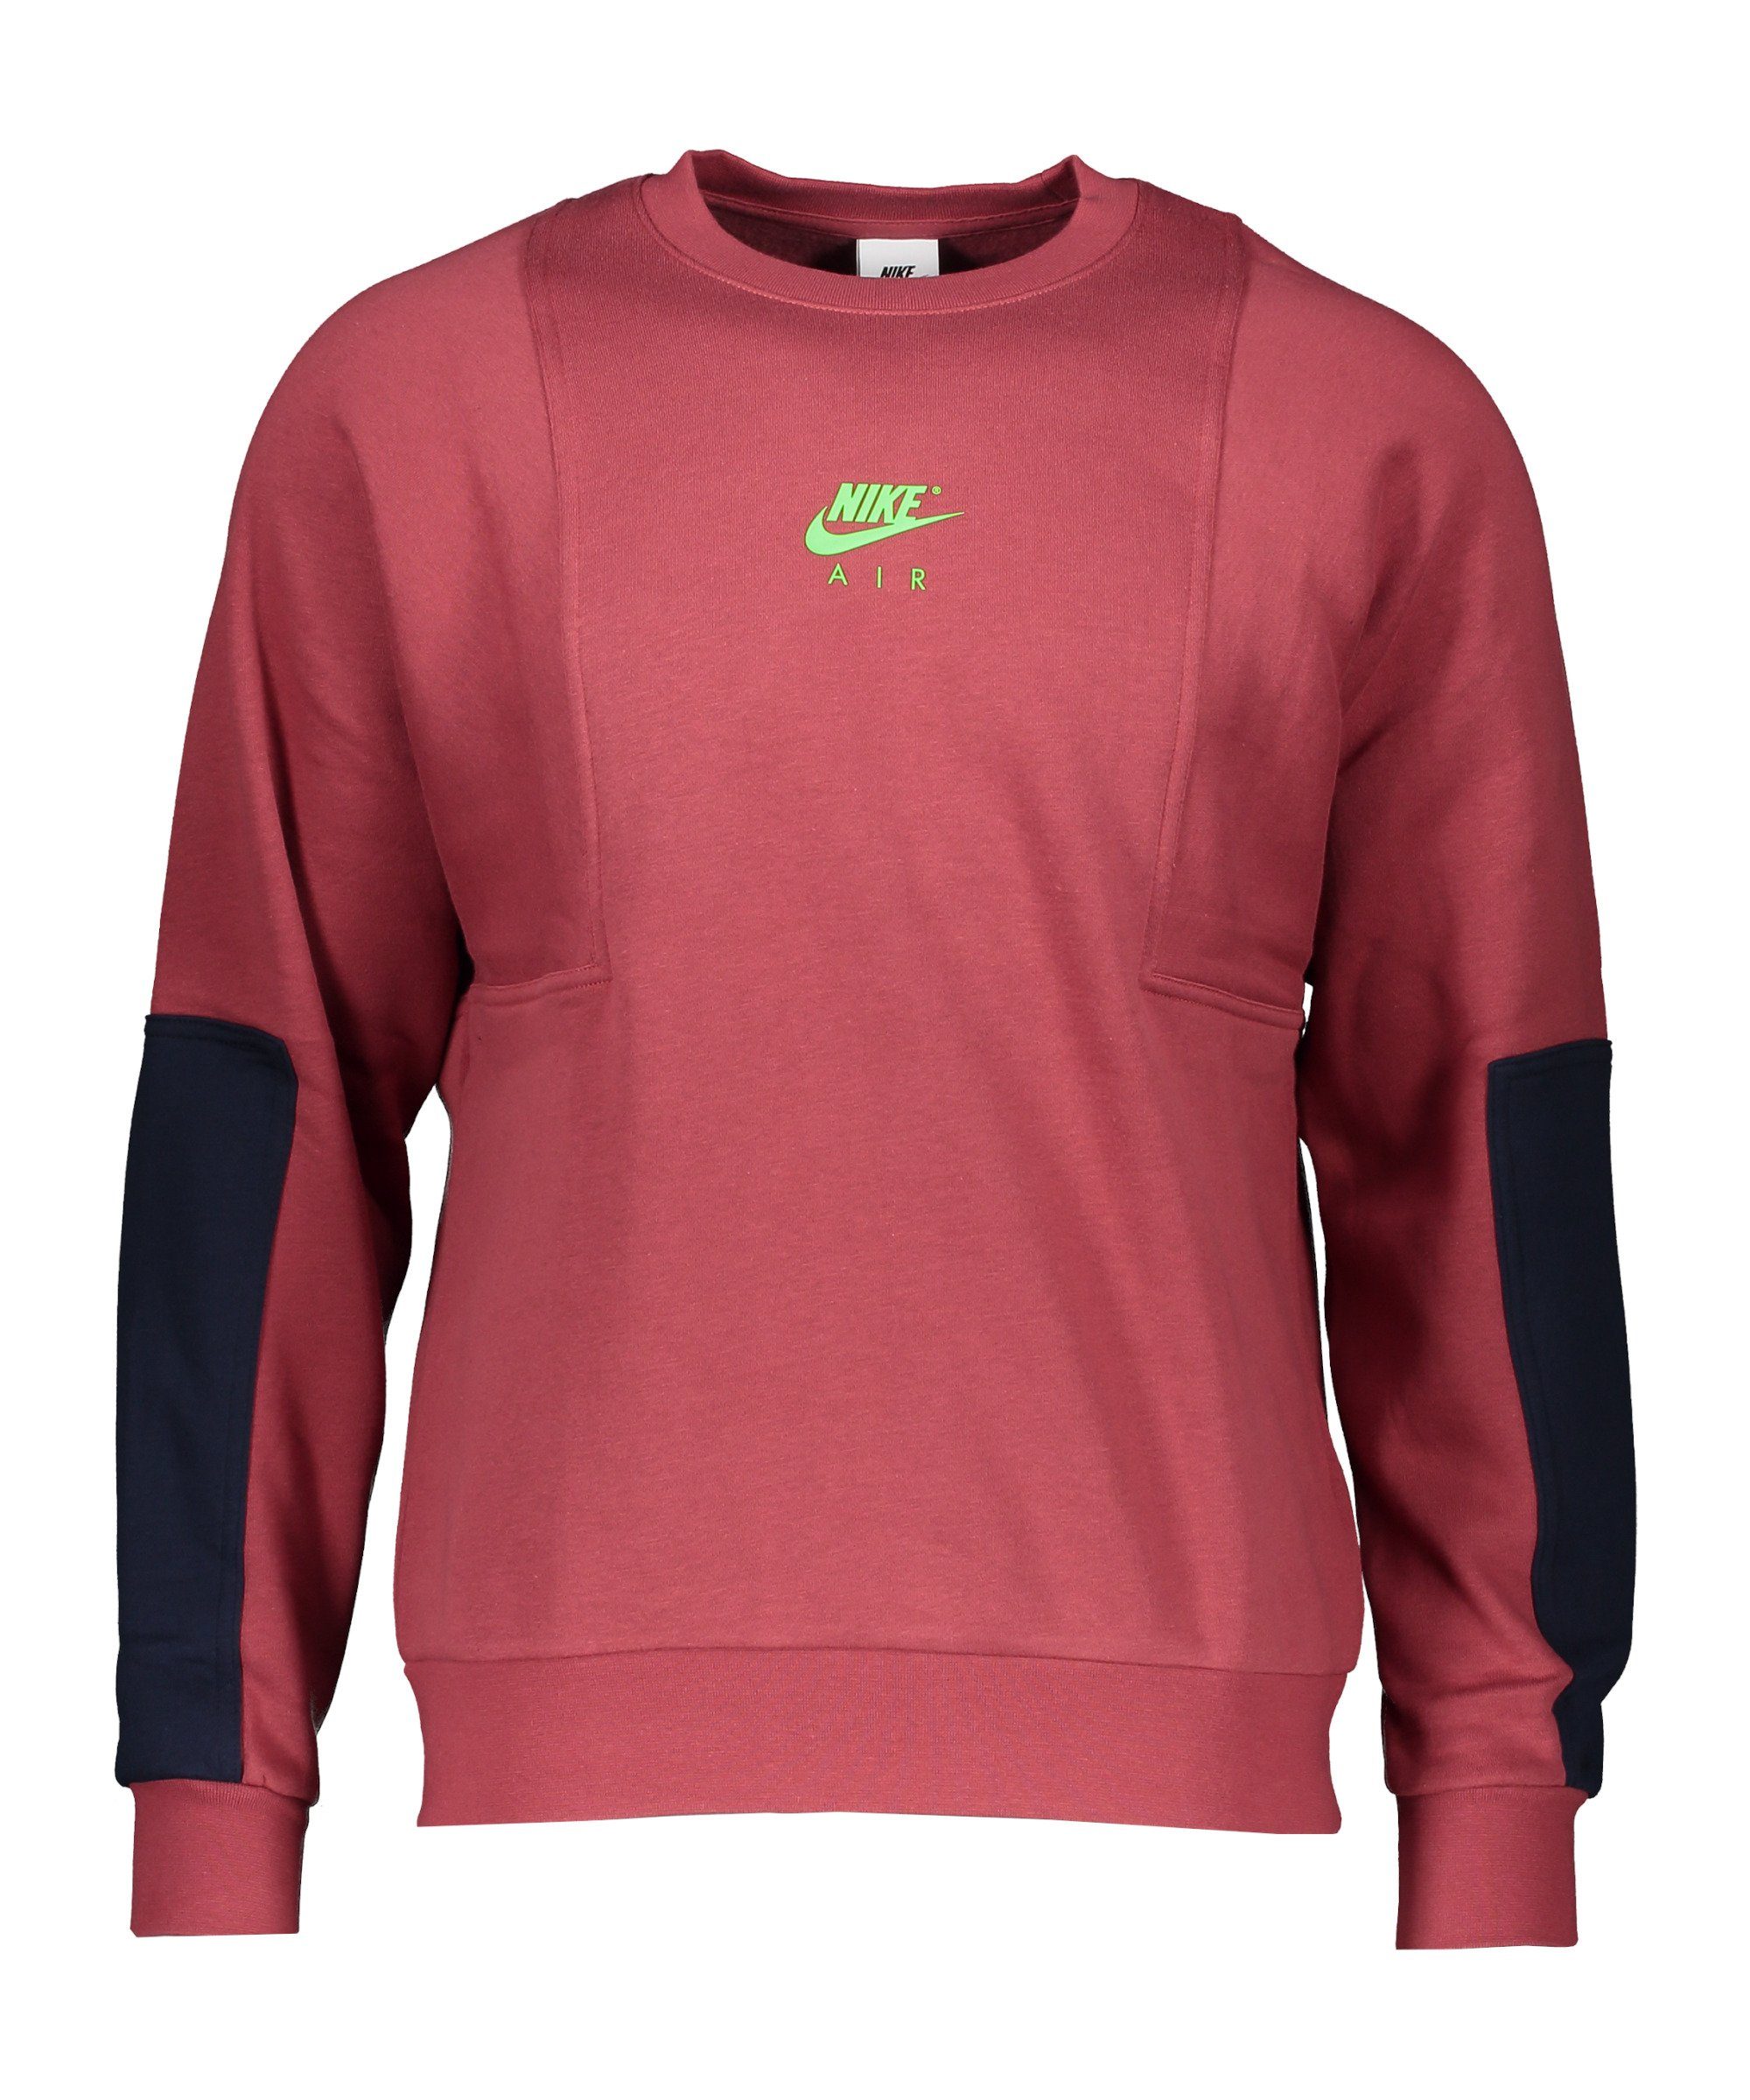 Nike Sportswear Sweatshirt Air Brushed-Back Fleece Crew Sweatshirt rotblaugruen